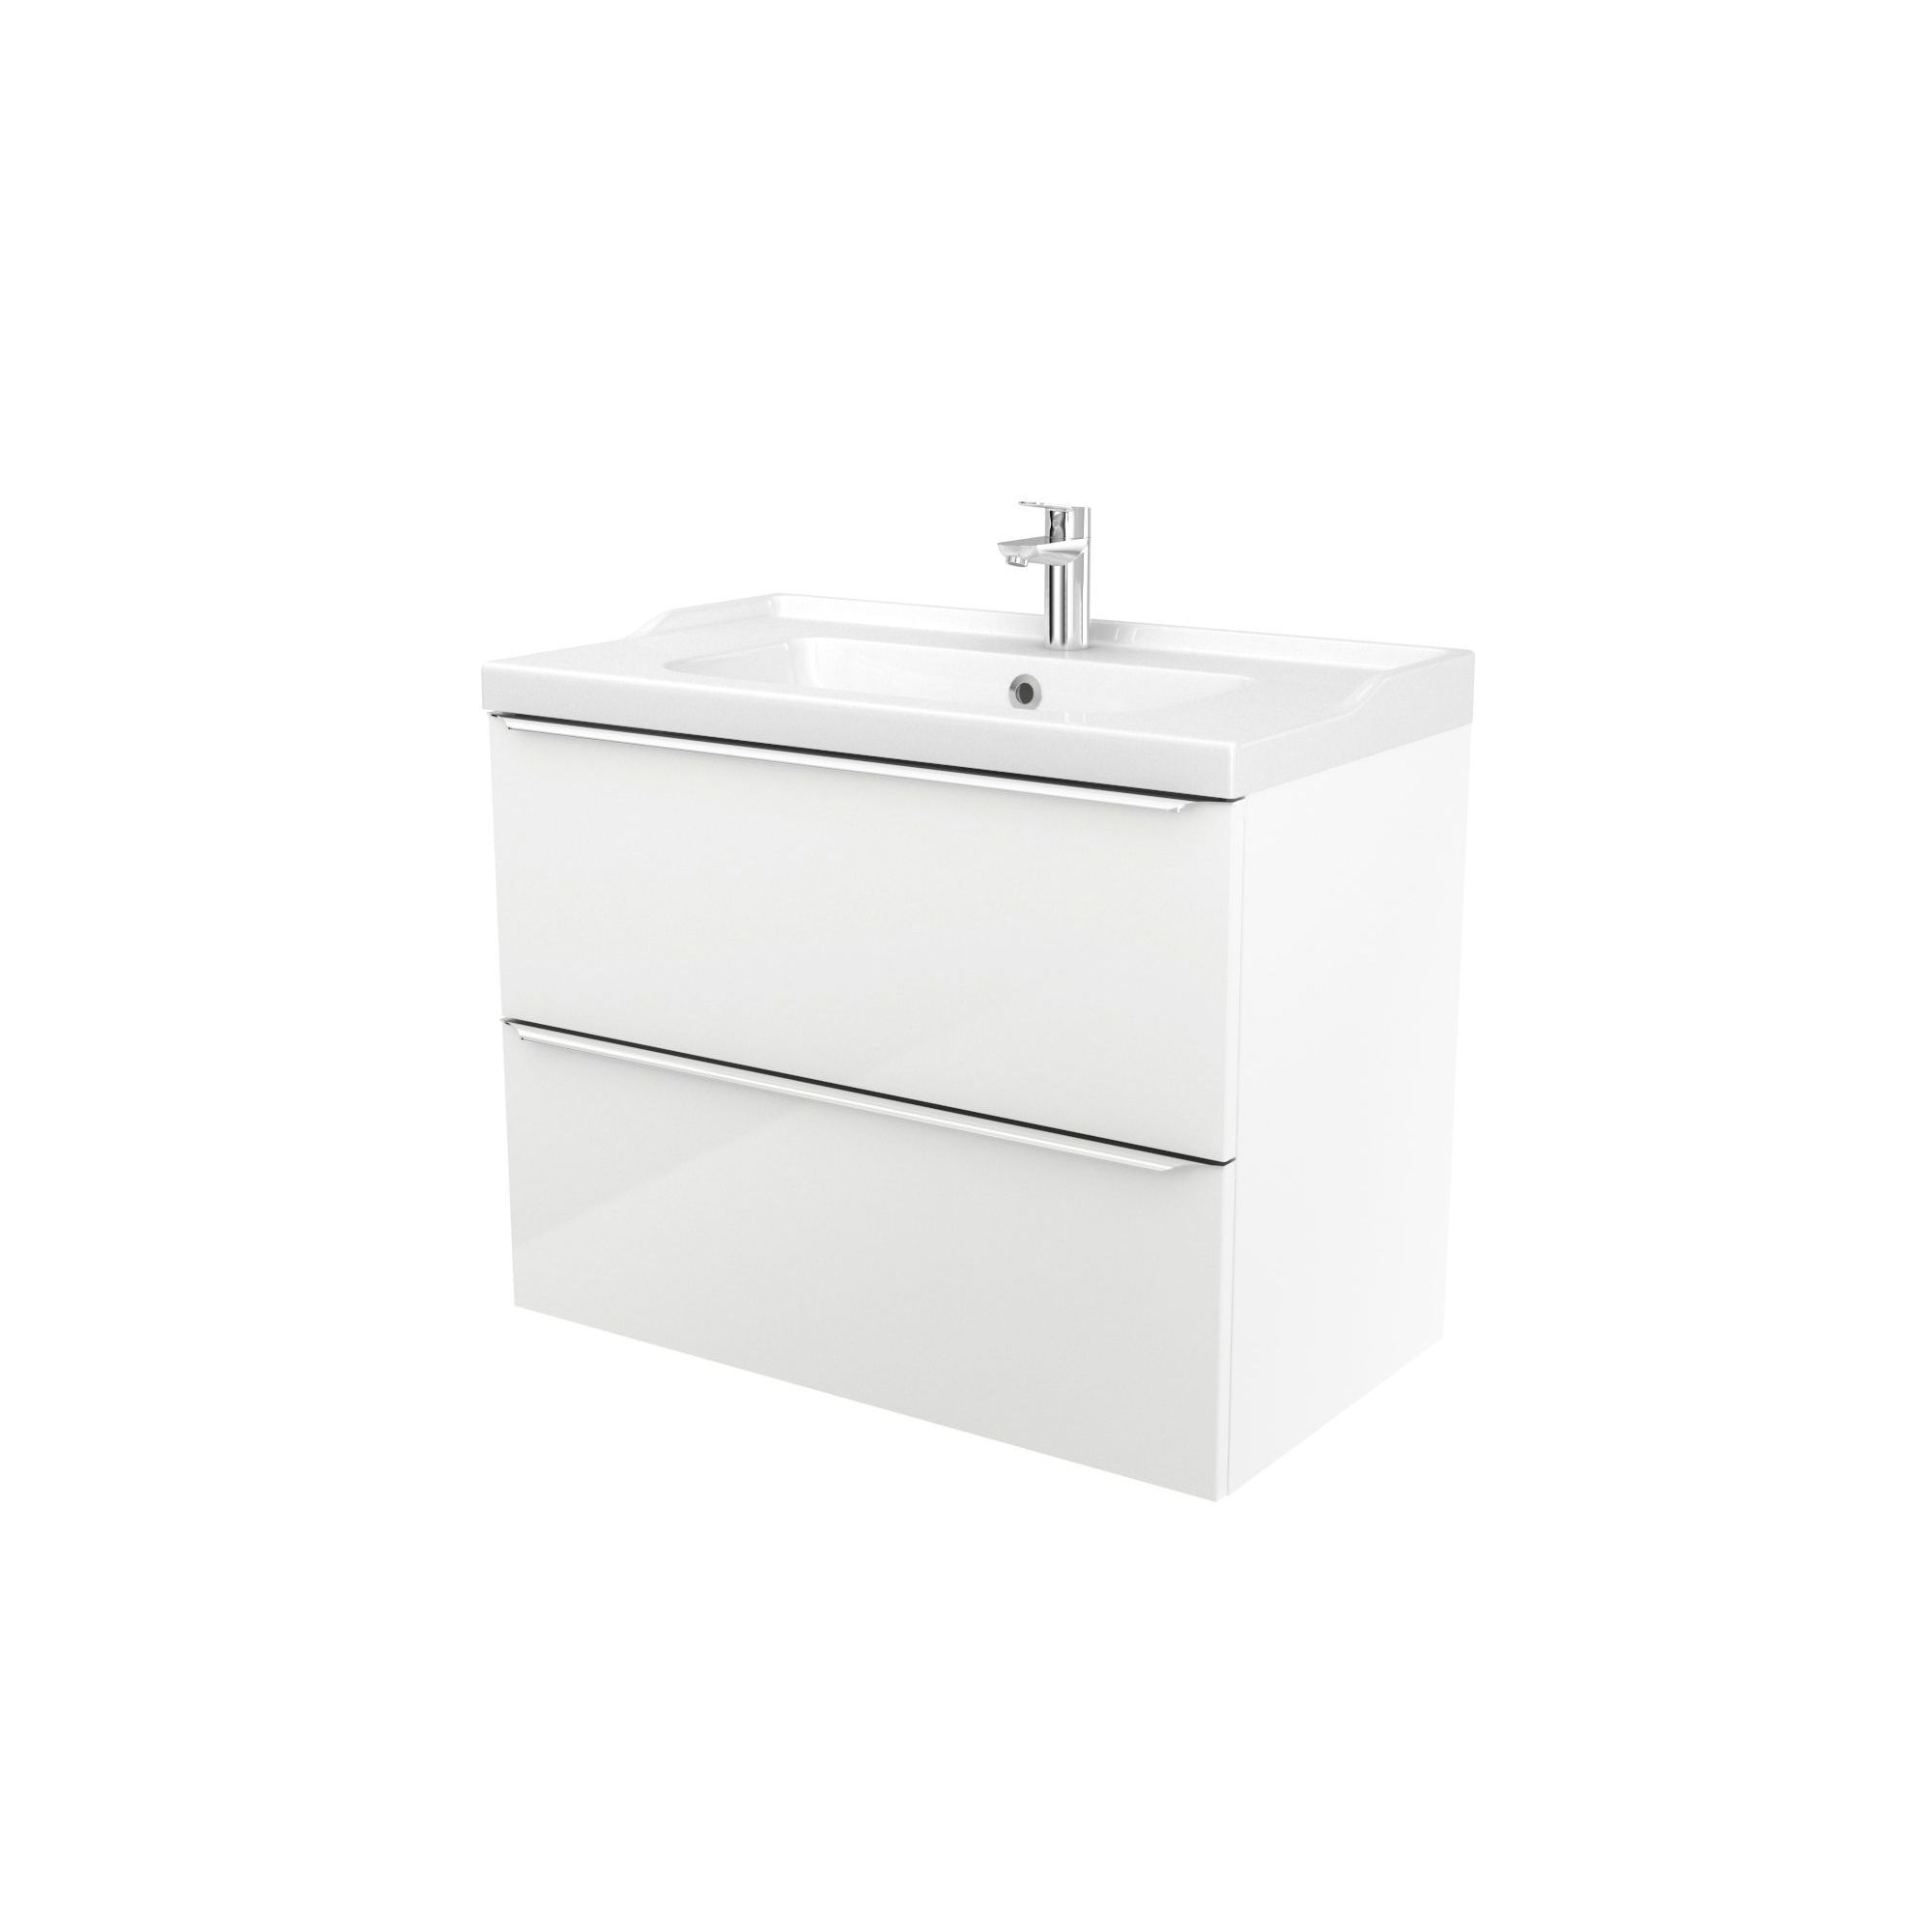 GoodHome Imandra White Wall-mounted Vanity unit & basin set - Includes Lana basin (W)804mm